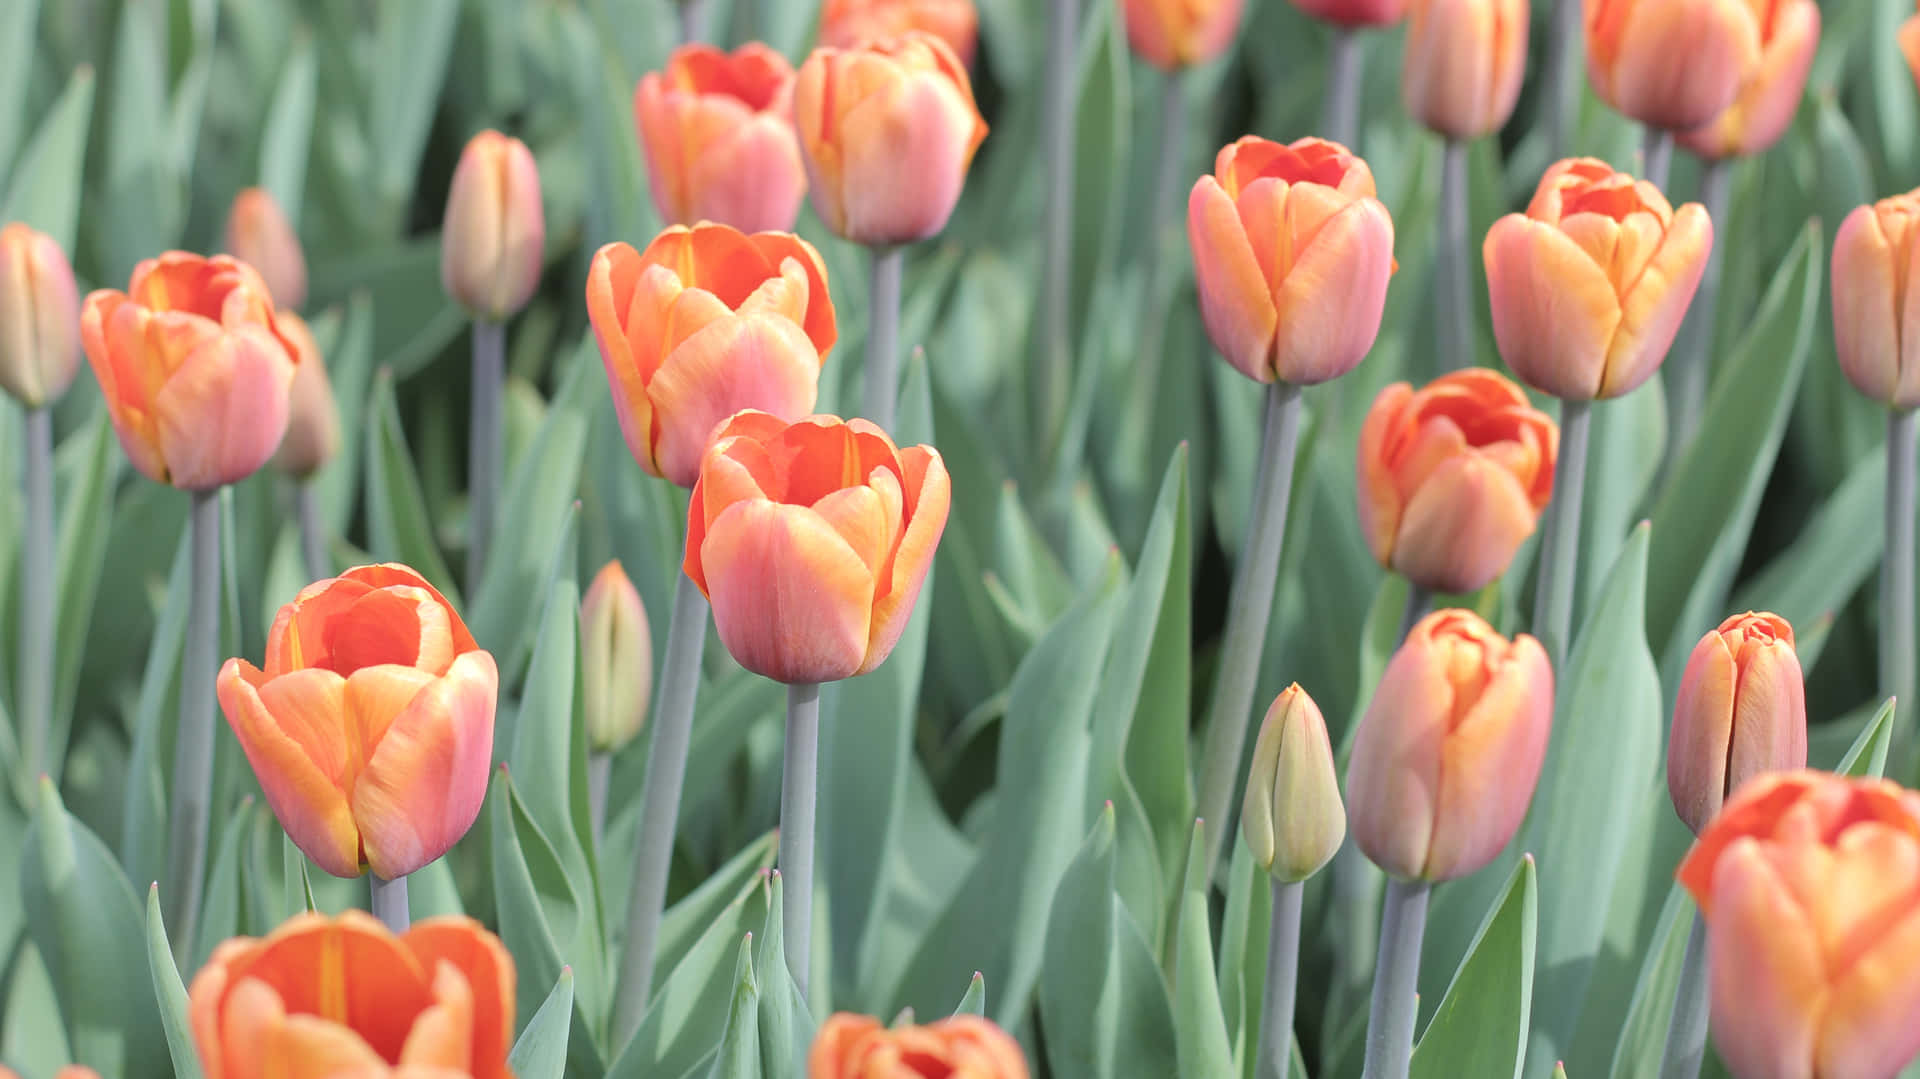 Enjoy the beauty of tulips!